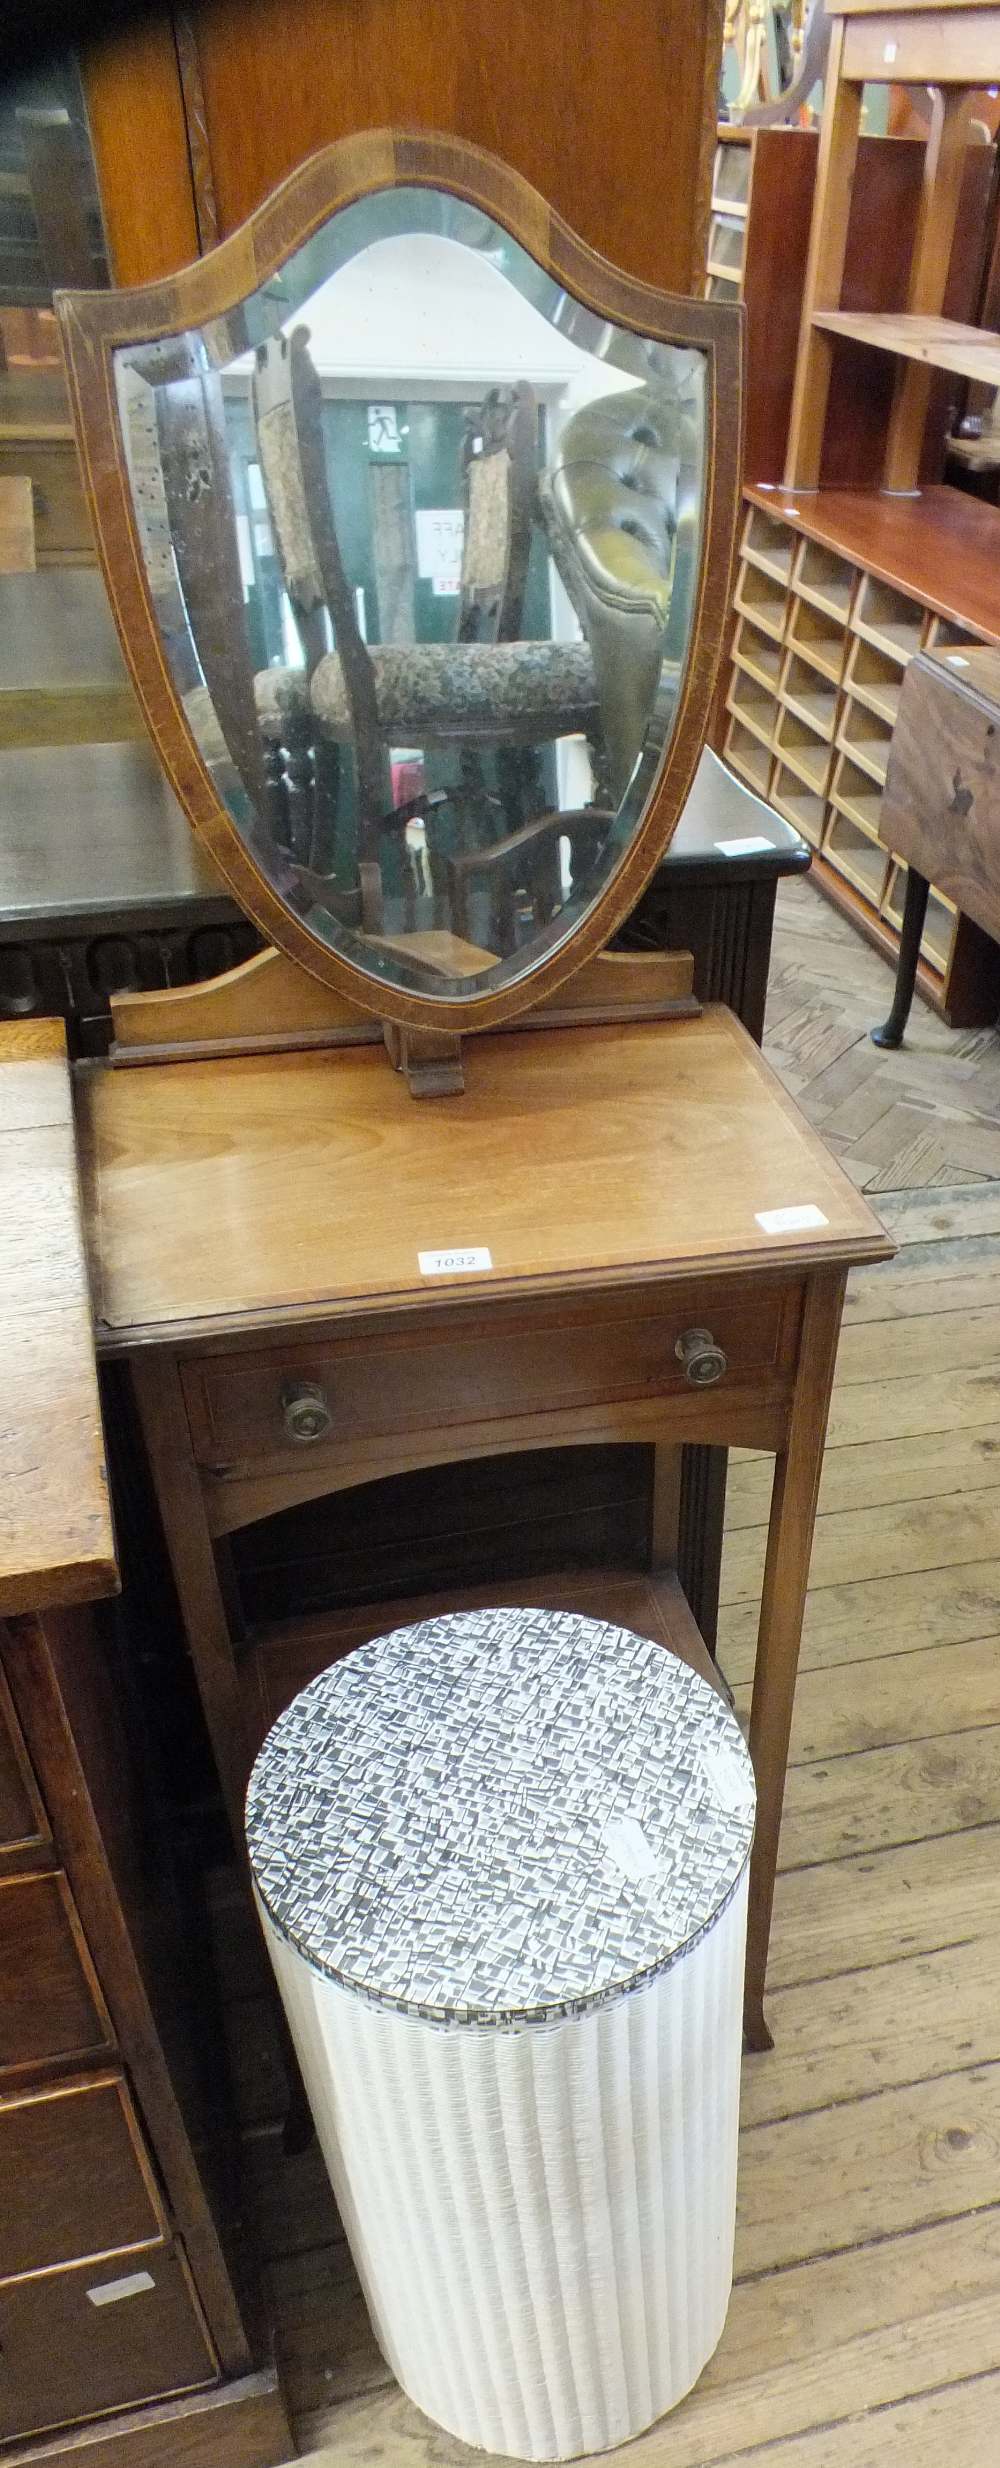 A gentleman's washstand with shield mirror and a circular Lloyd loom linen bin